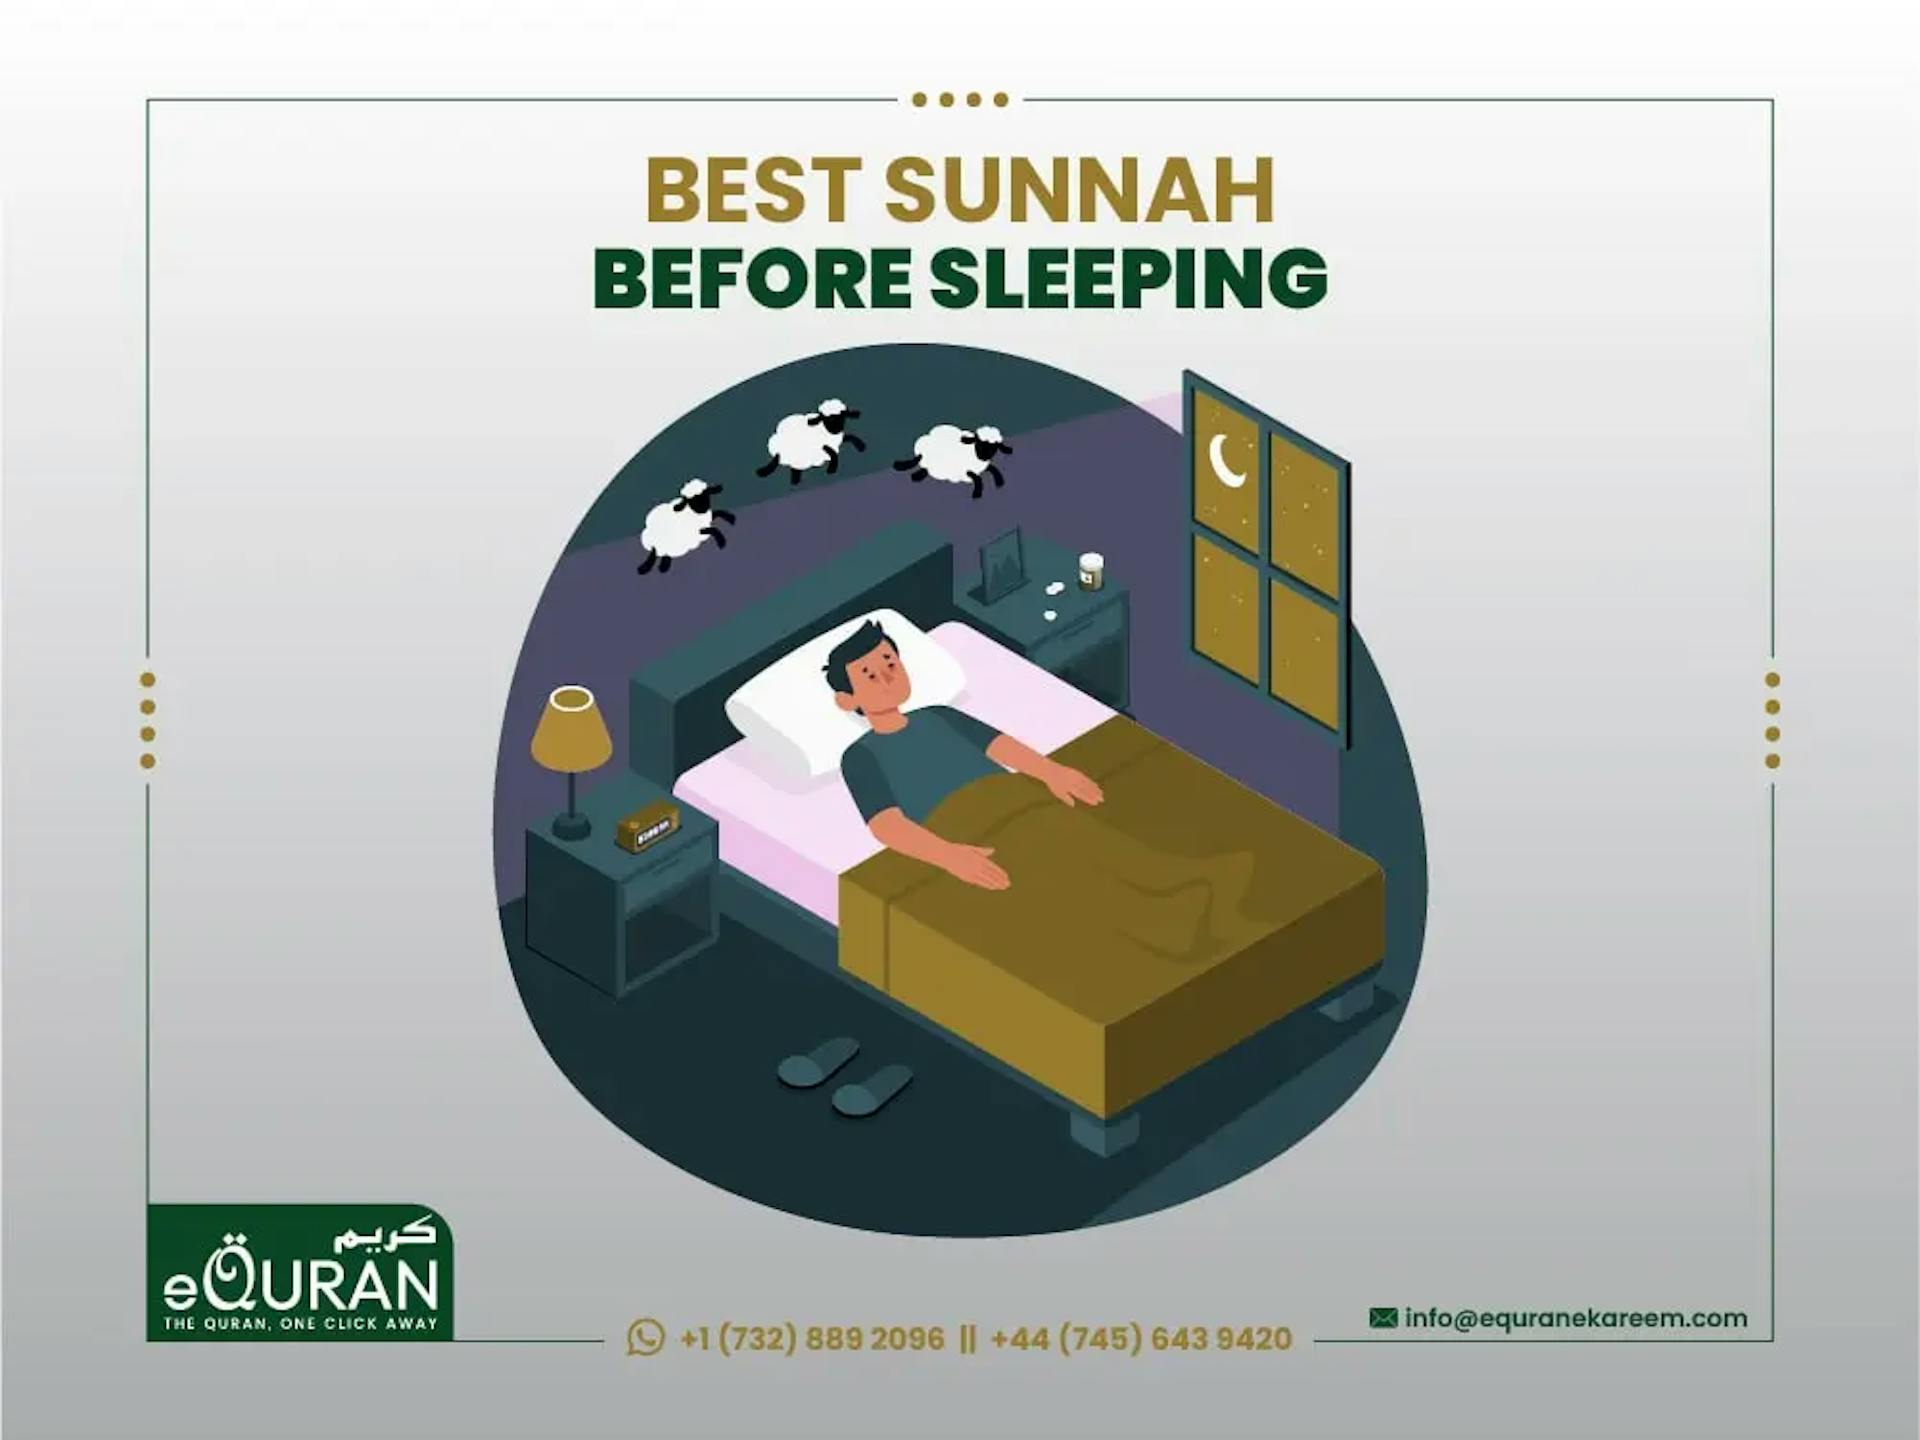 Best Sunnah before sleeping by eQuranekareem Online Quran Academy